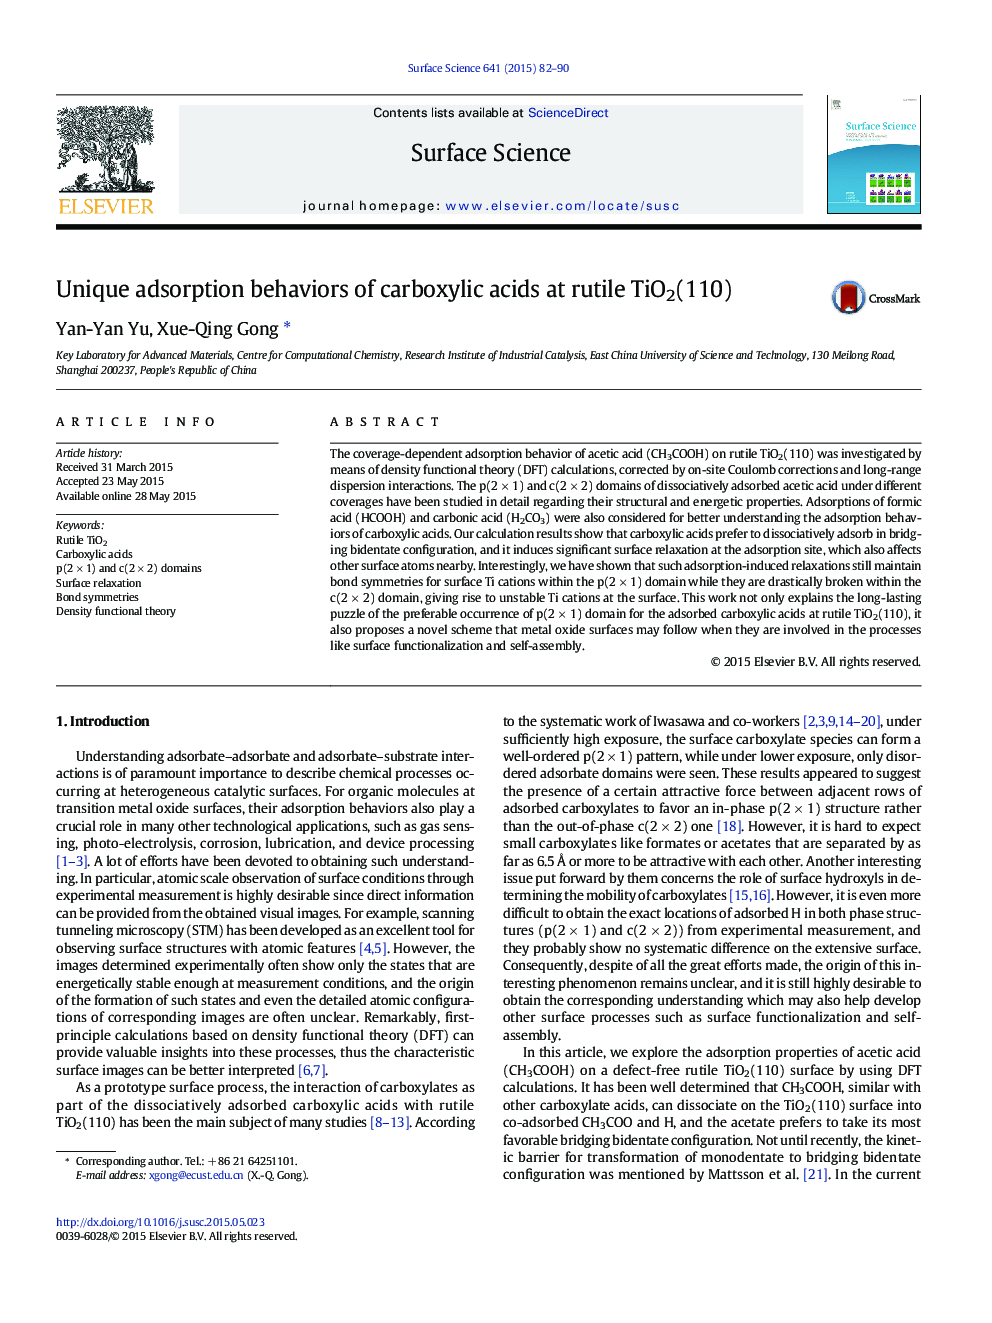 Unique adsorption behaviors of carboxylic acids at rutile TiO2(110)